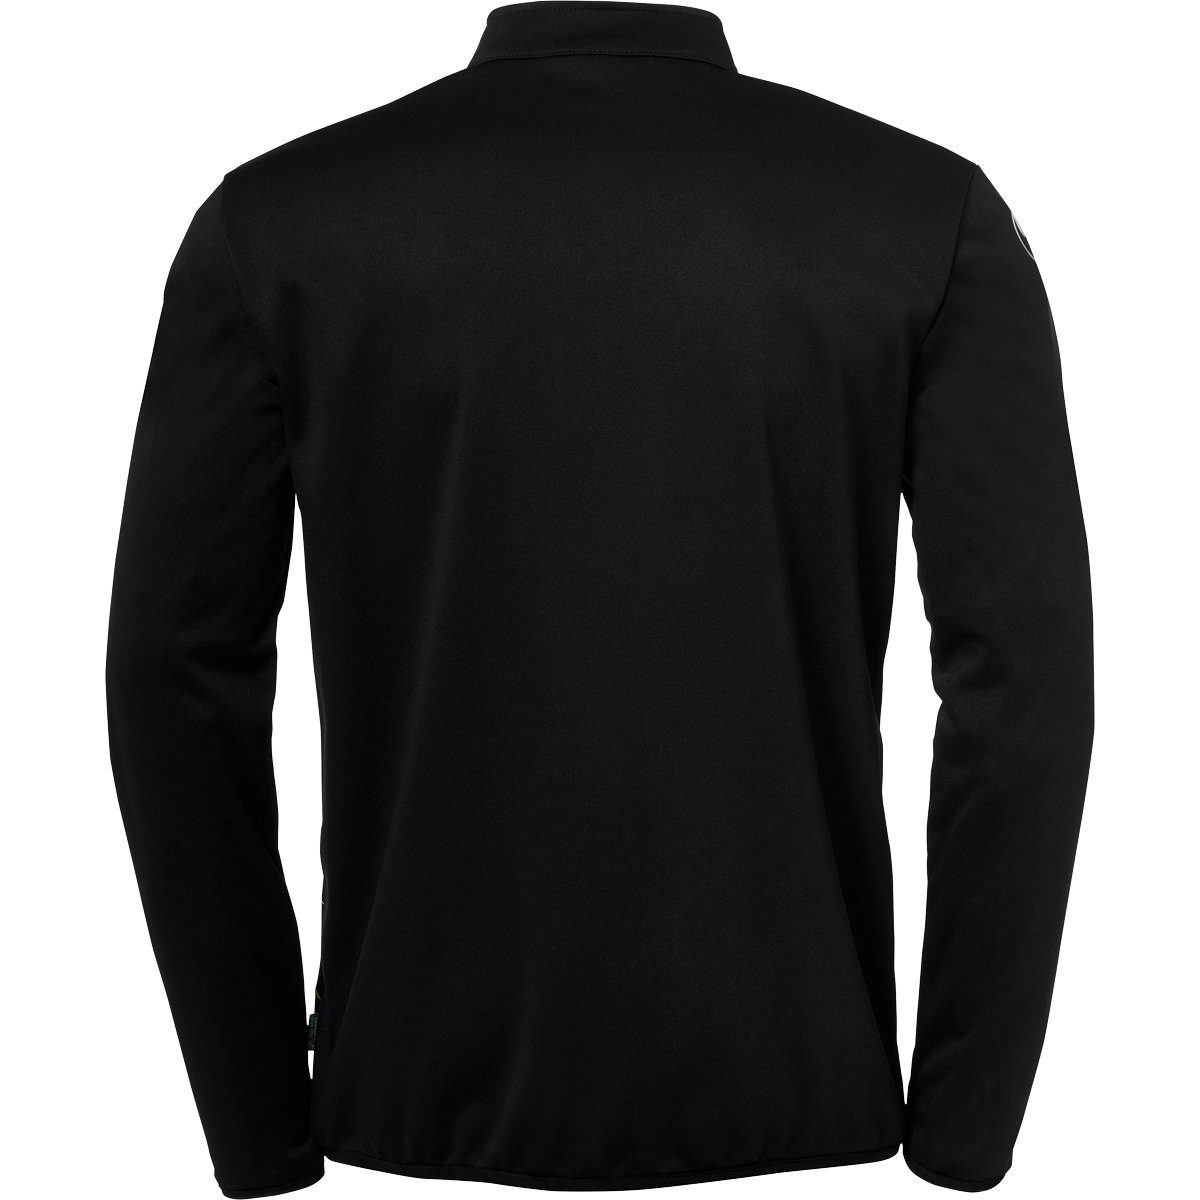 26 SCORE uhlsport (1-St) Trainingsjacke schwarz/weiß uhlsport CLASSIC atmungsaktiv Trainingsjacke